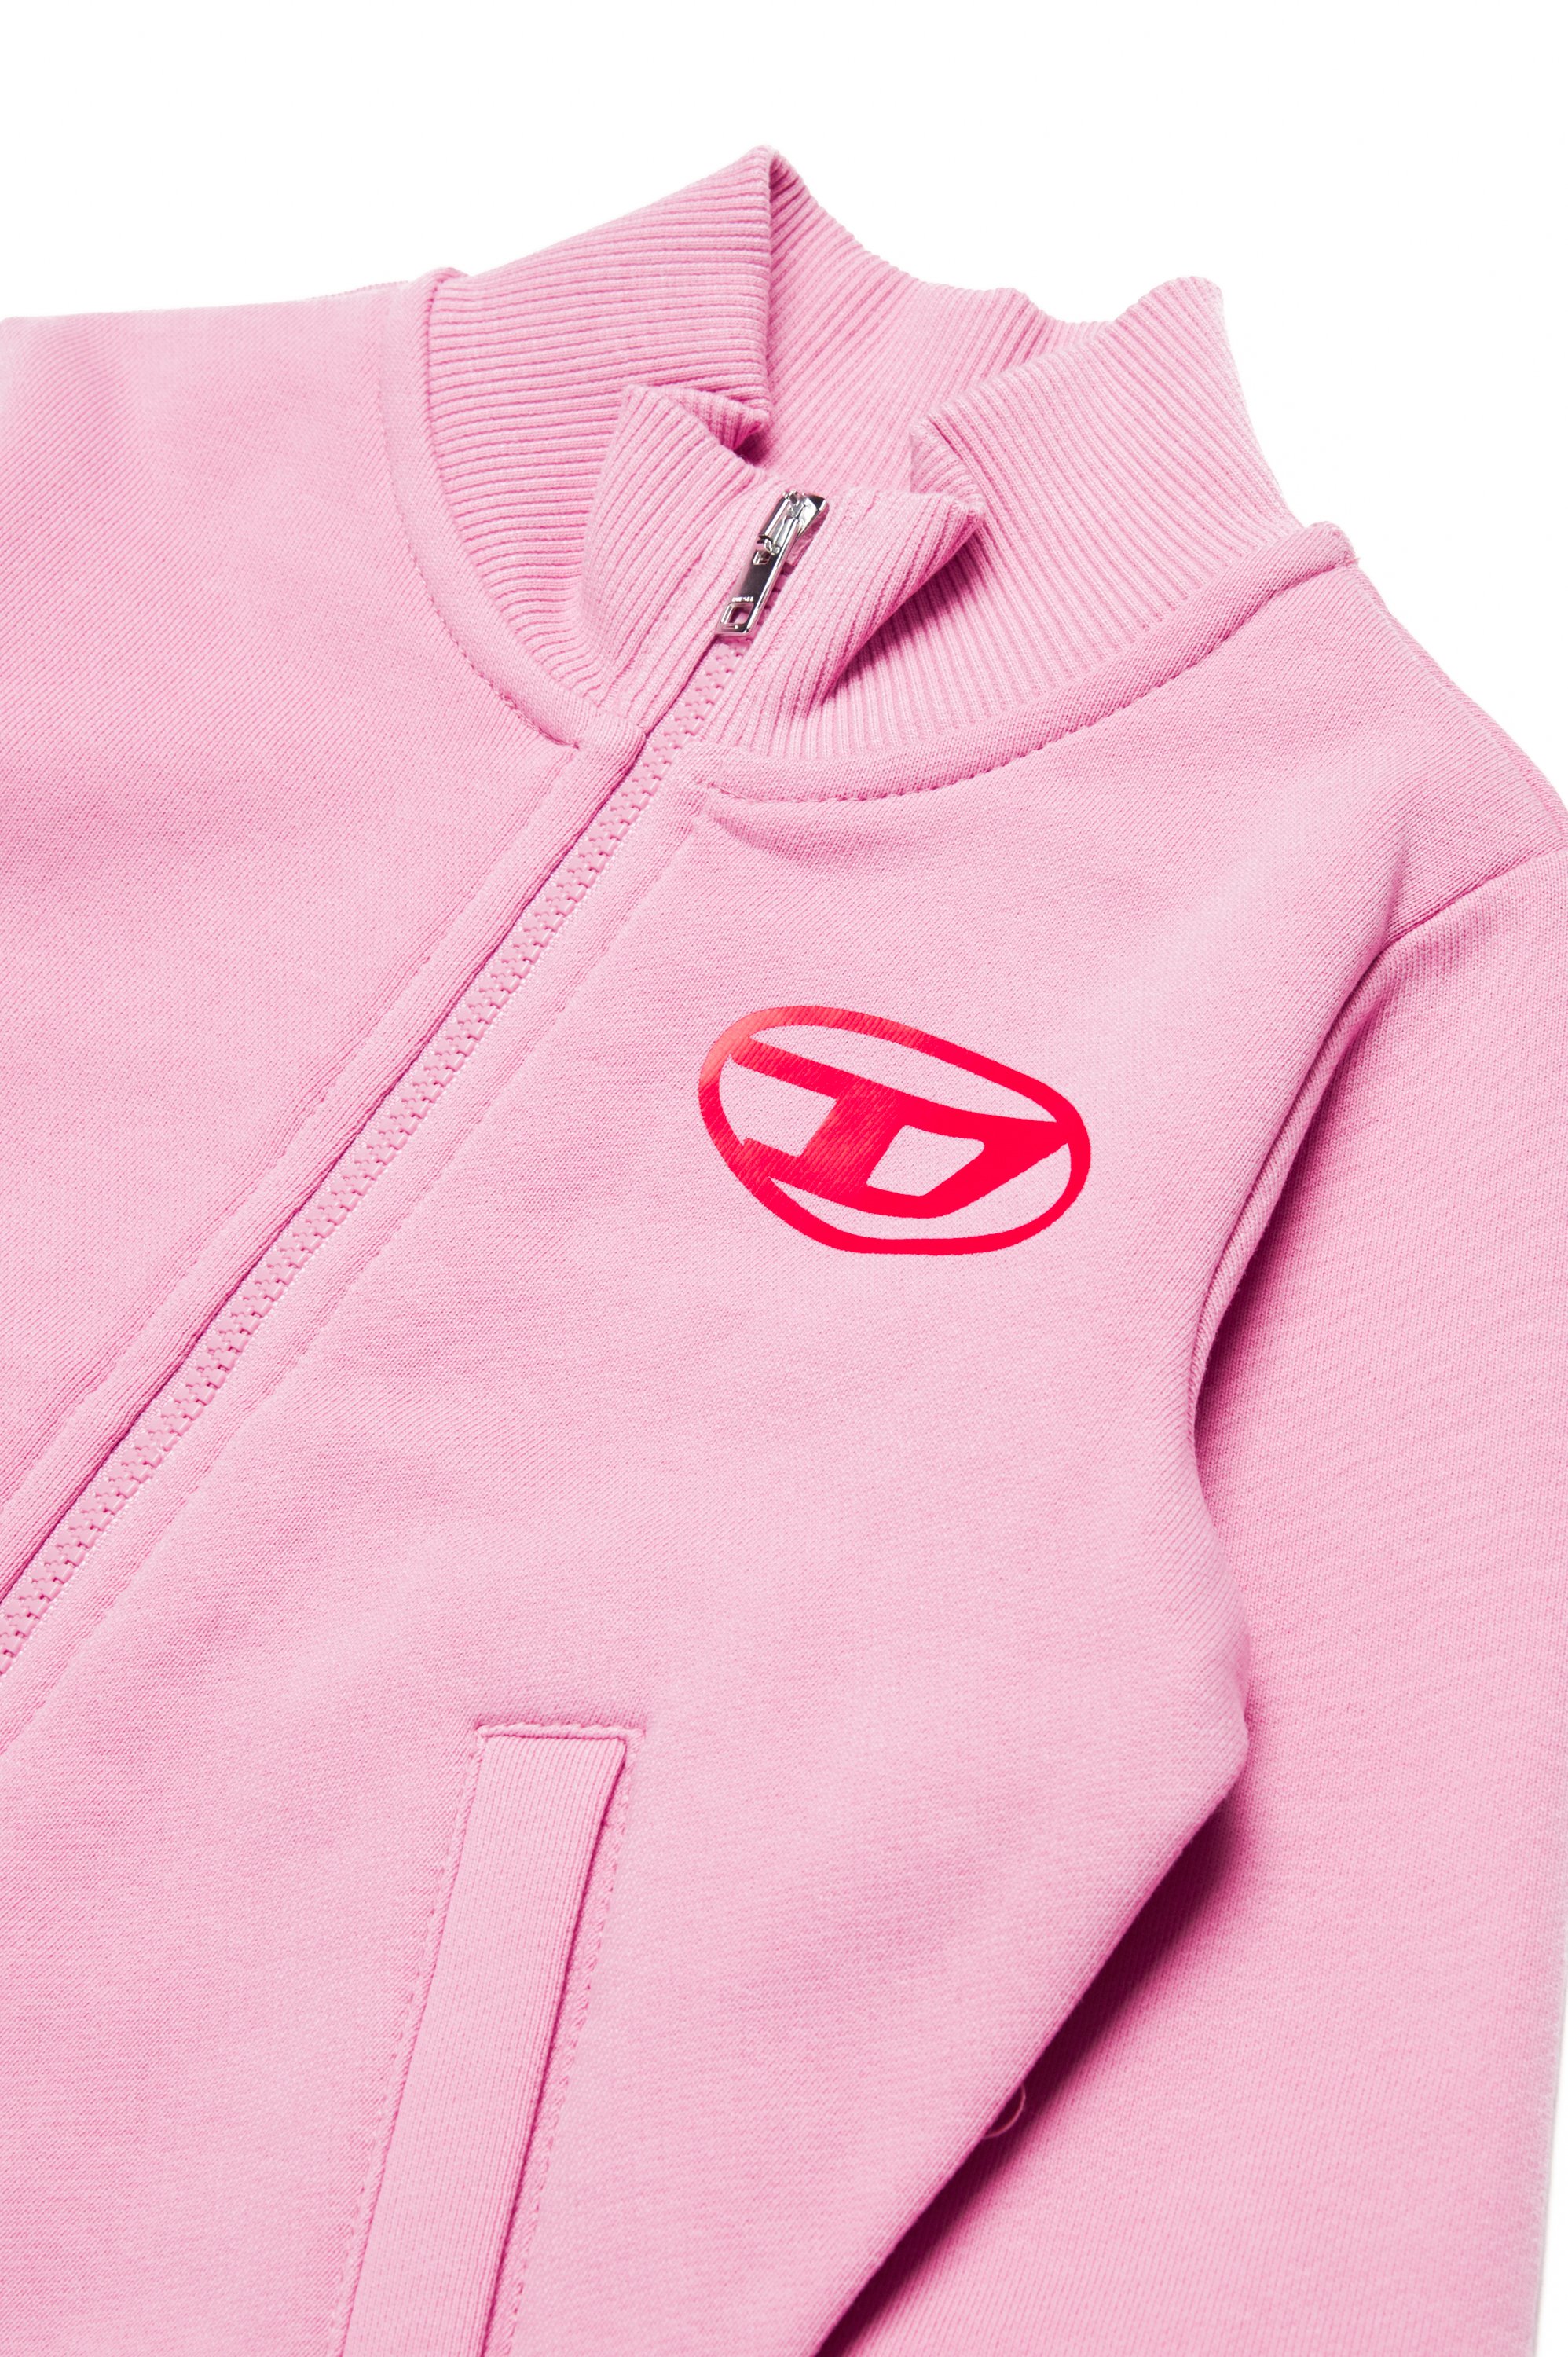 Diesel - SMARCOB, Unisex Zipped sweatshirt with Oval D print in Pink - Image 3